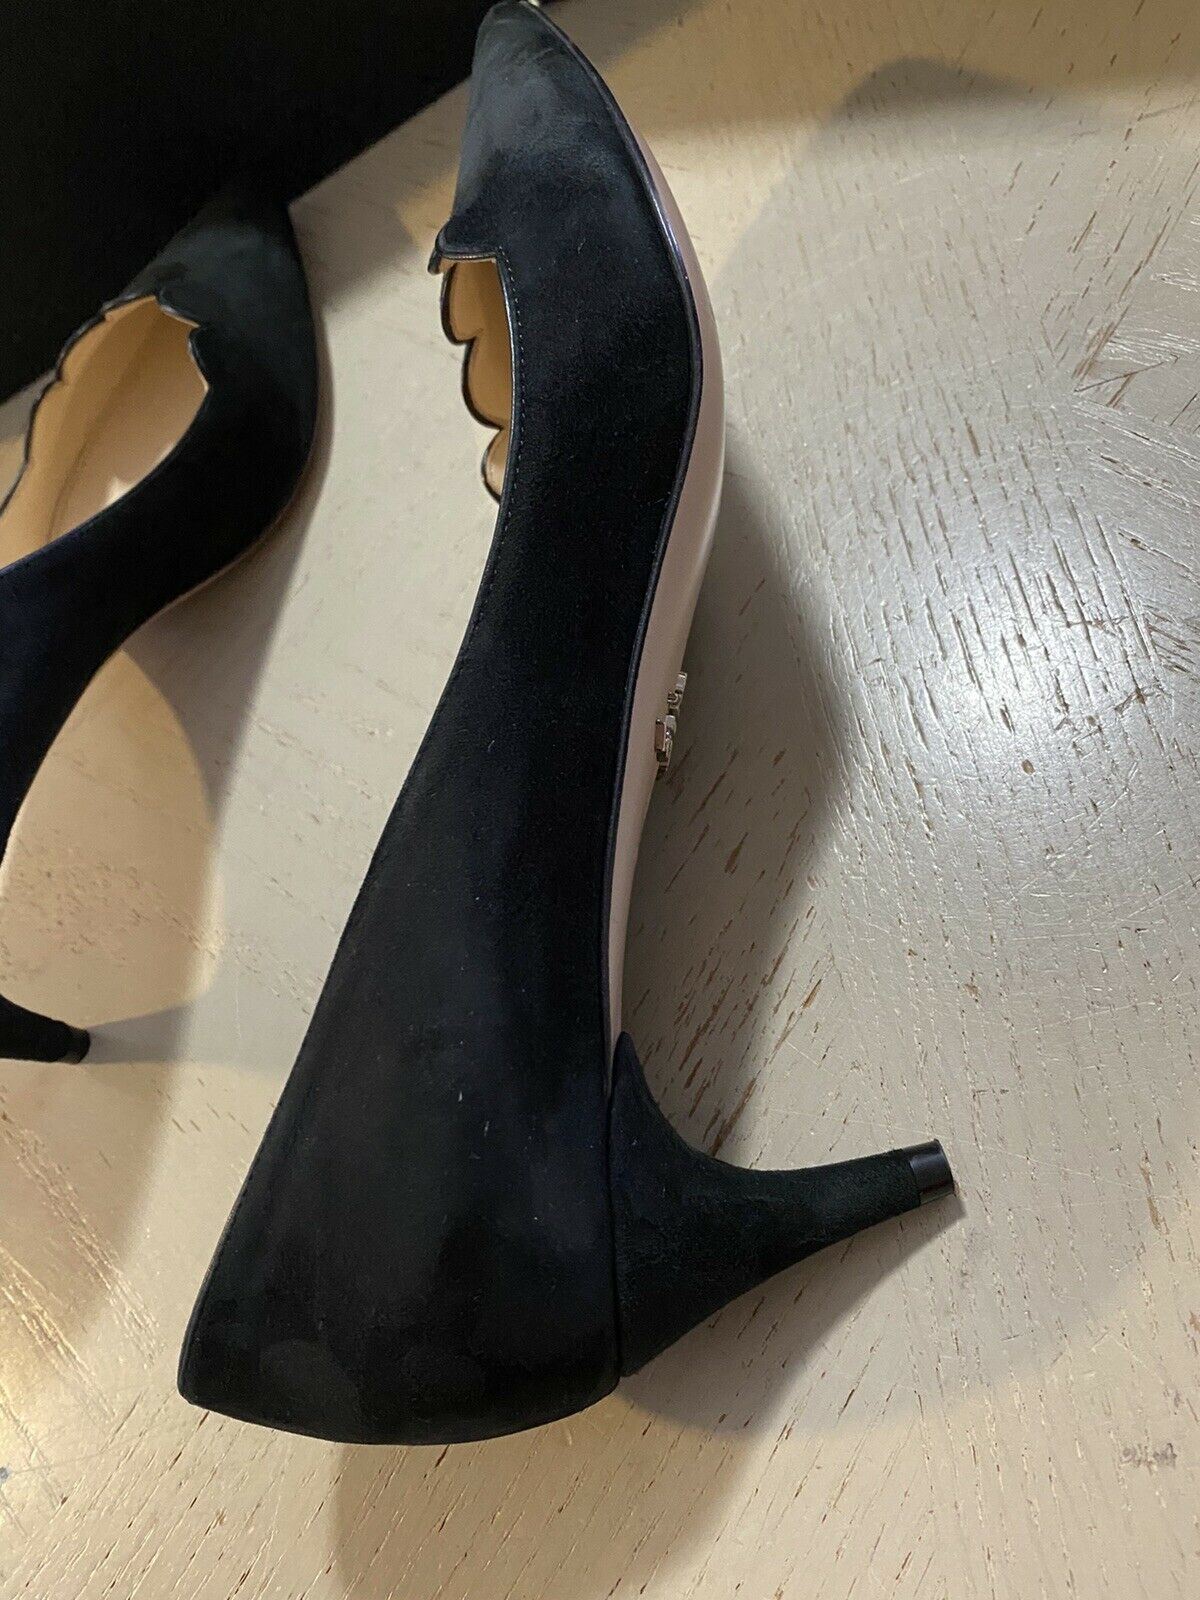 NIB $750 PRADA Women Scallop Suede Pumps Shoes Black 8.5 US/38.5 Eu Italy